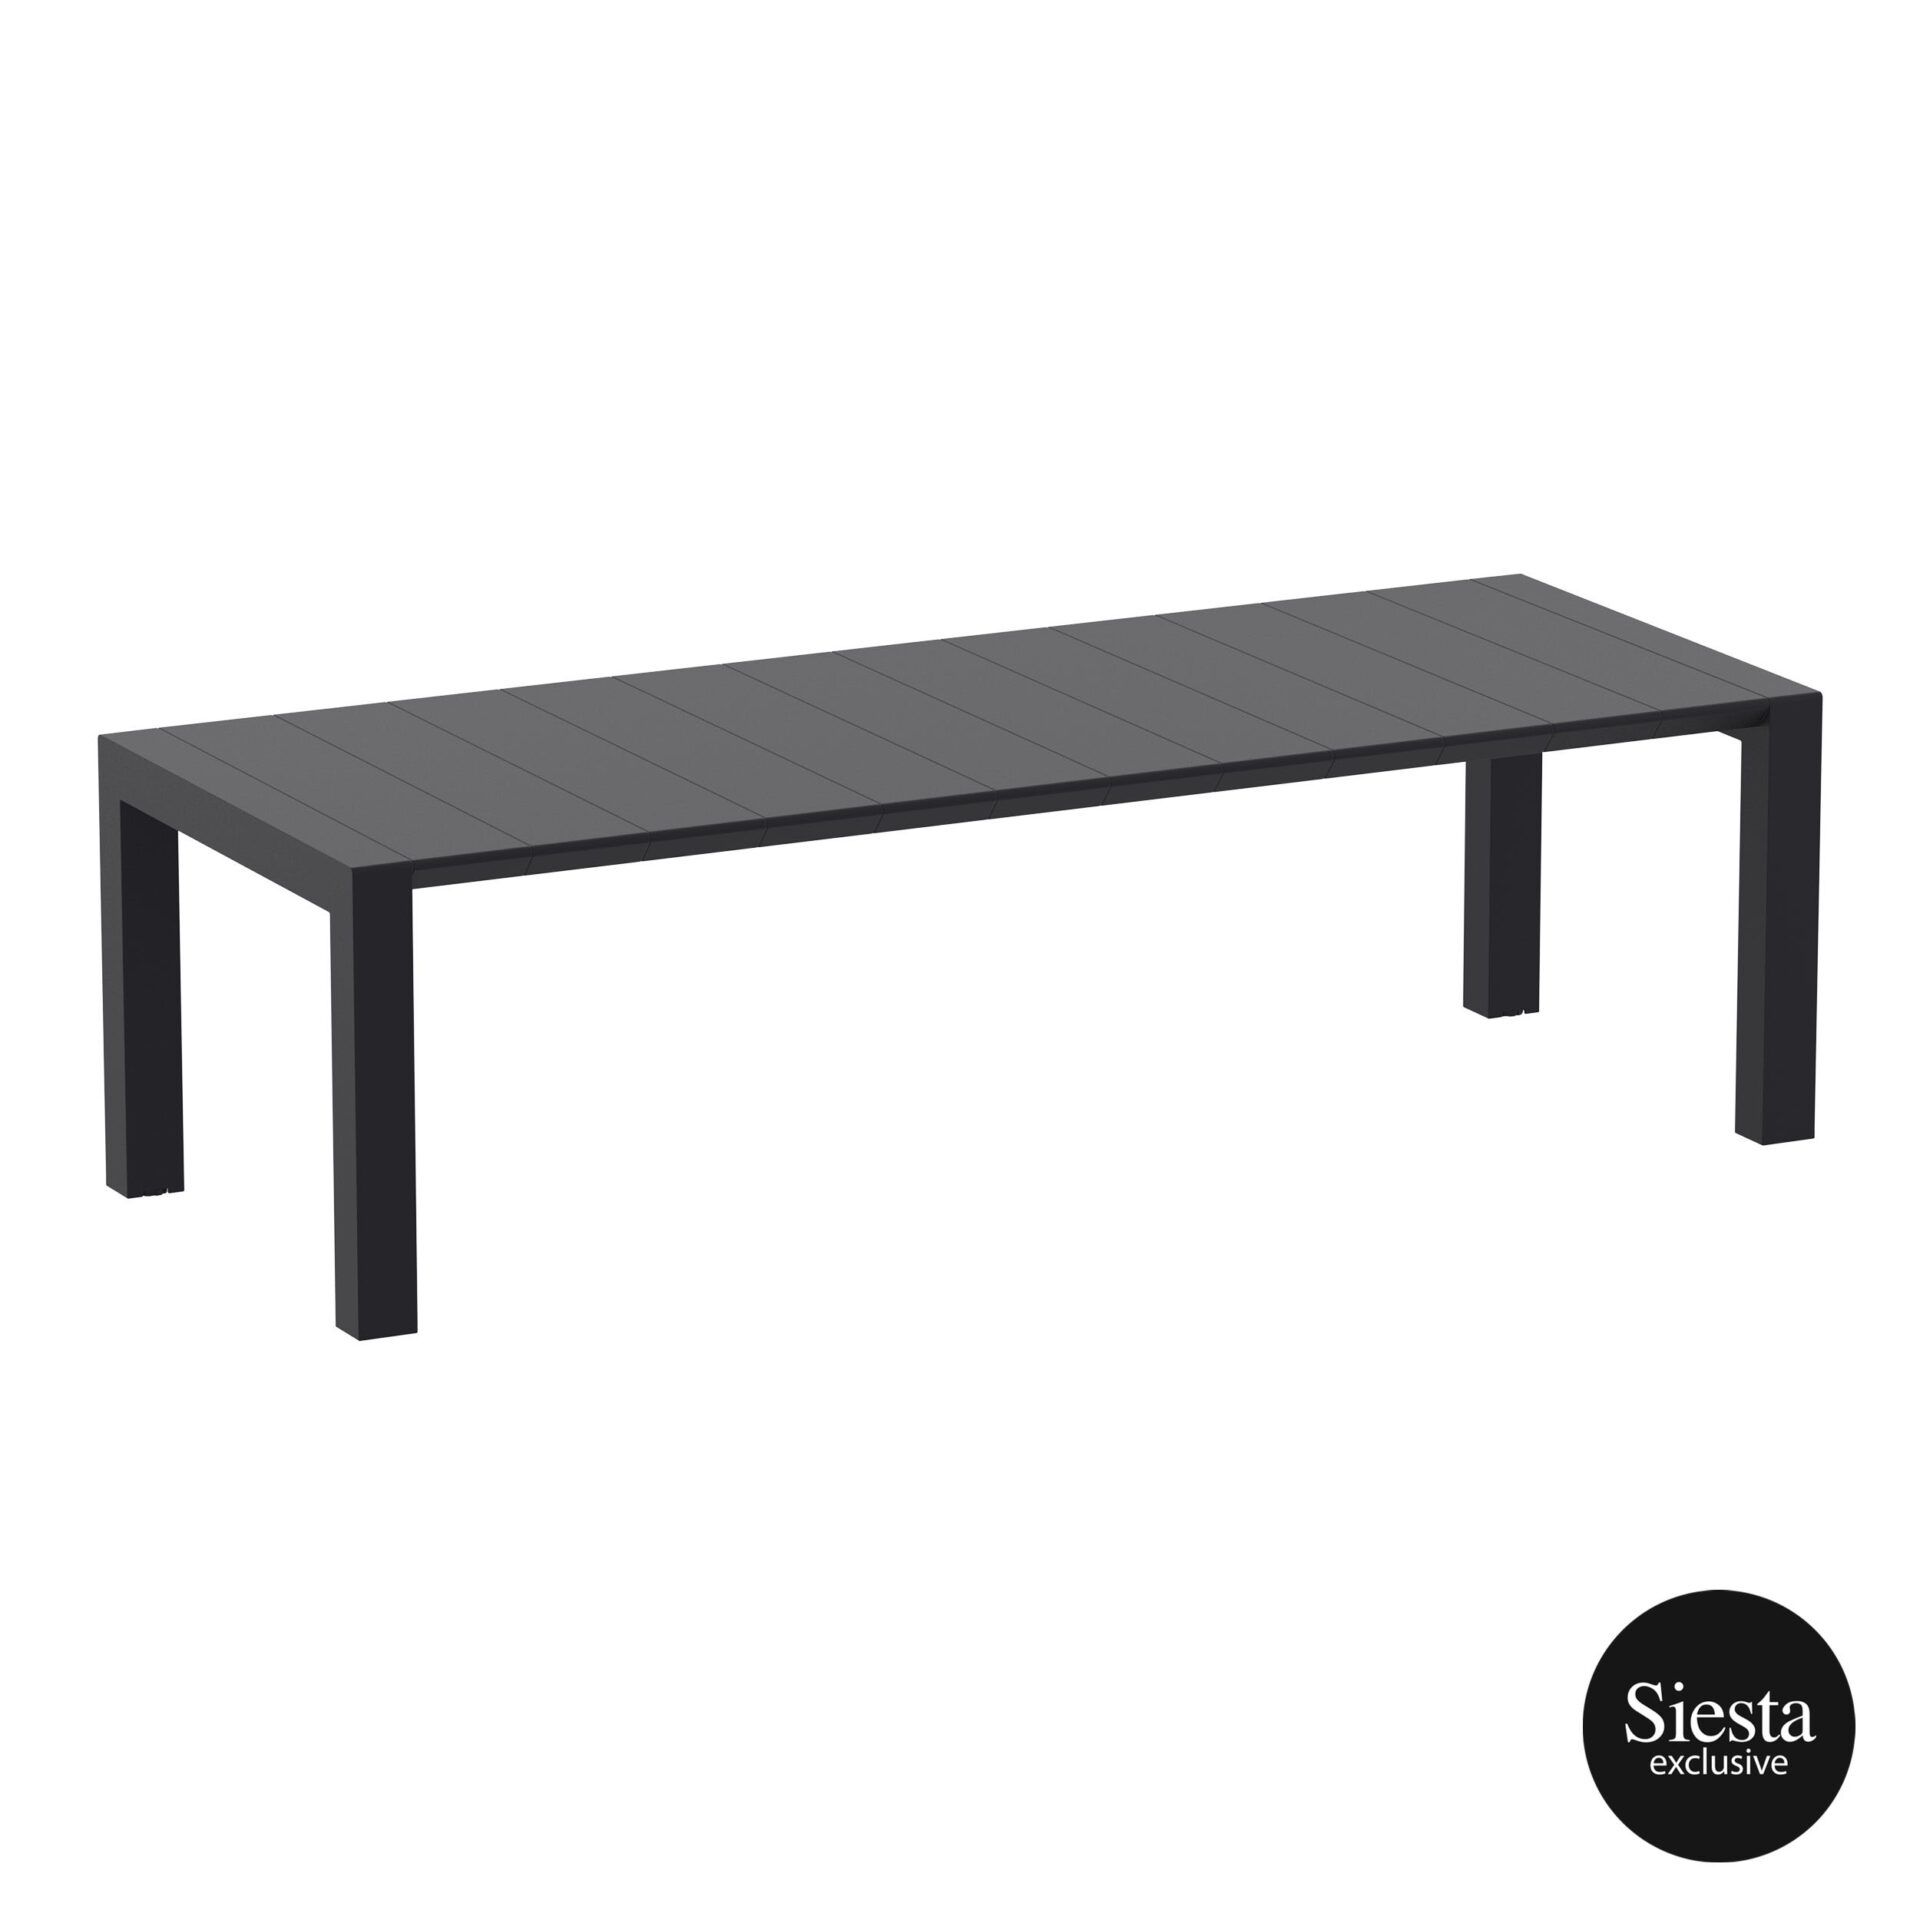 001 vegas table xl 260 black front side